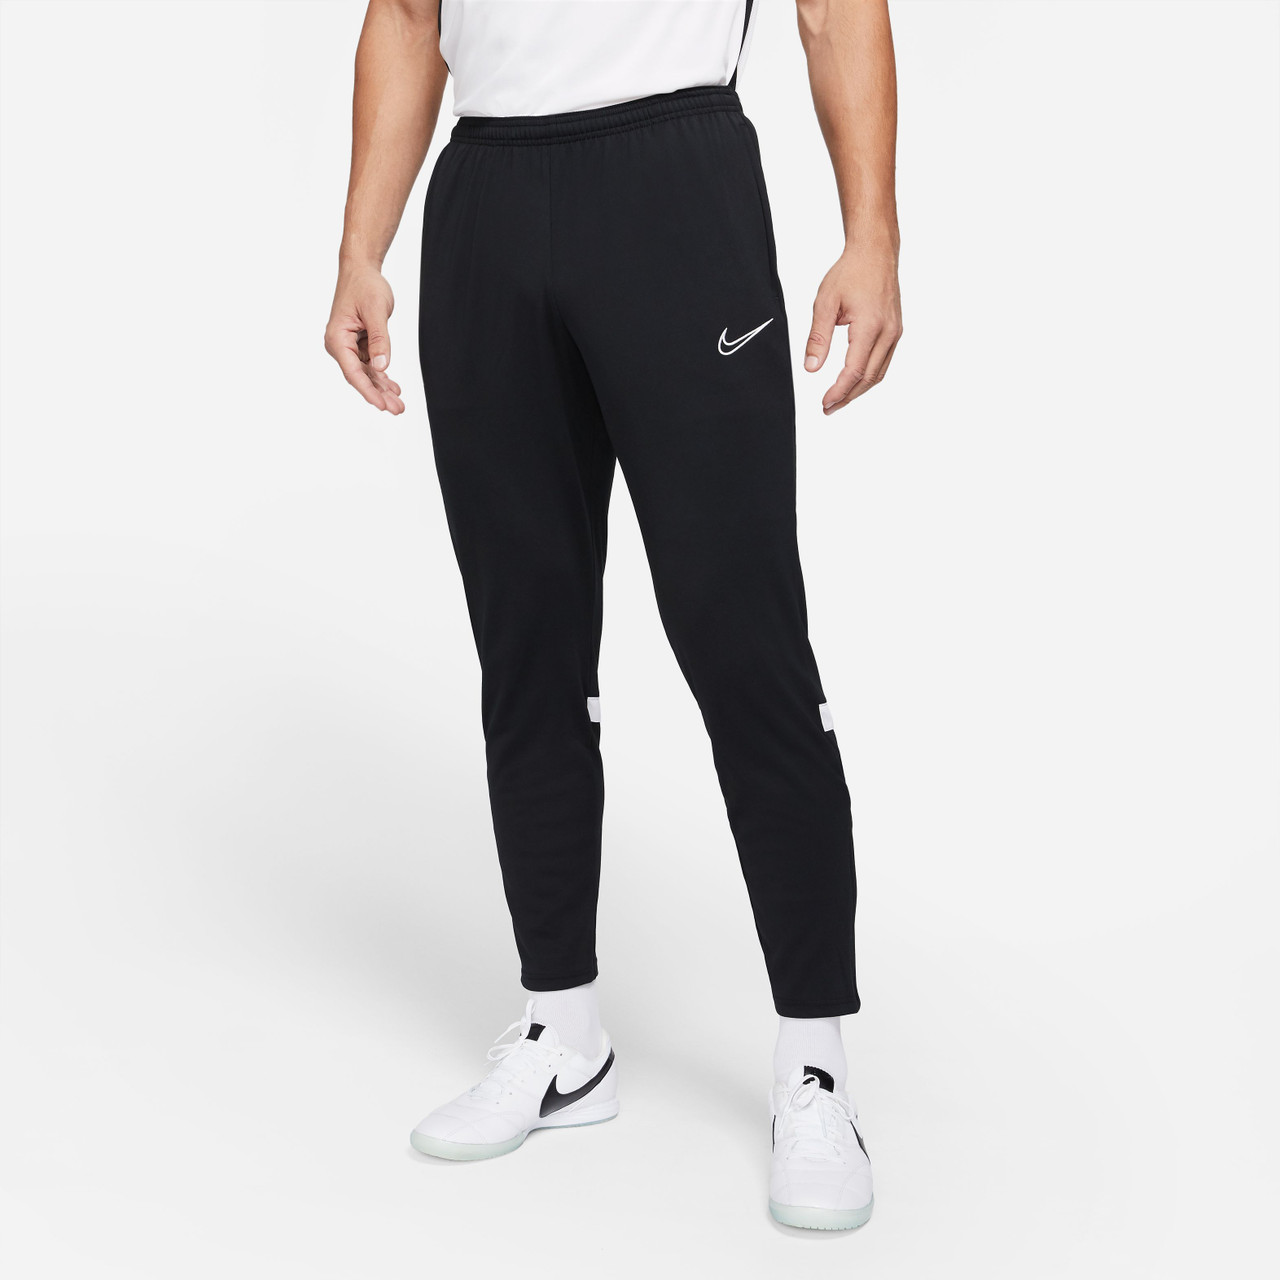 Nike Dri Fit Running Pants For Women Size XL - Pockets